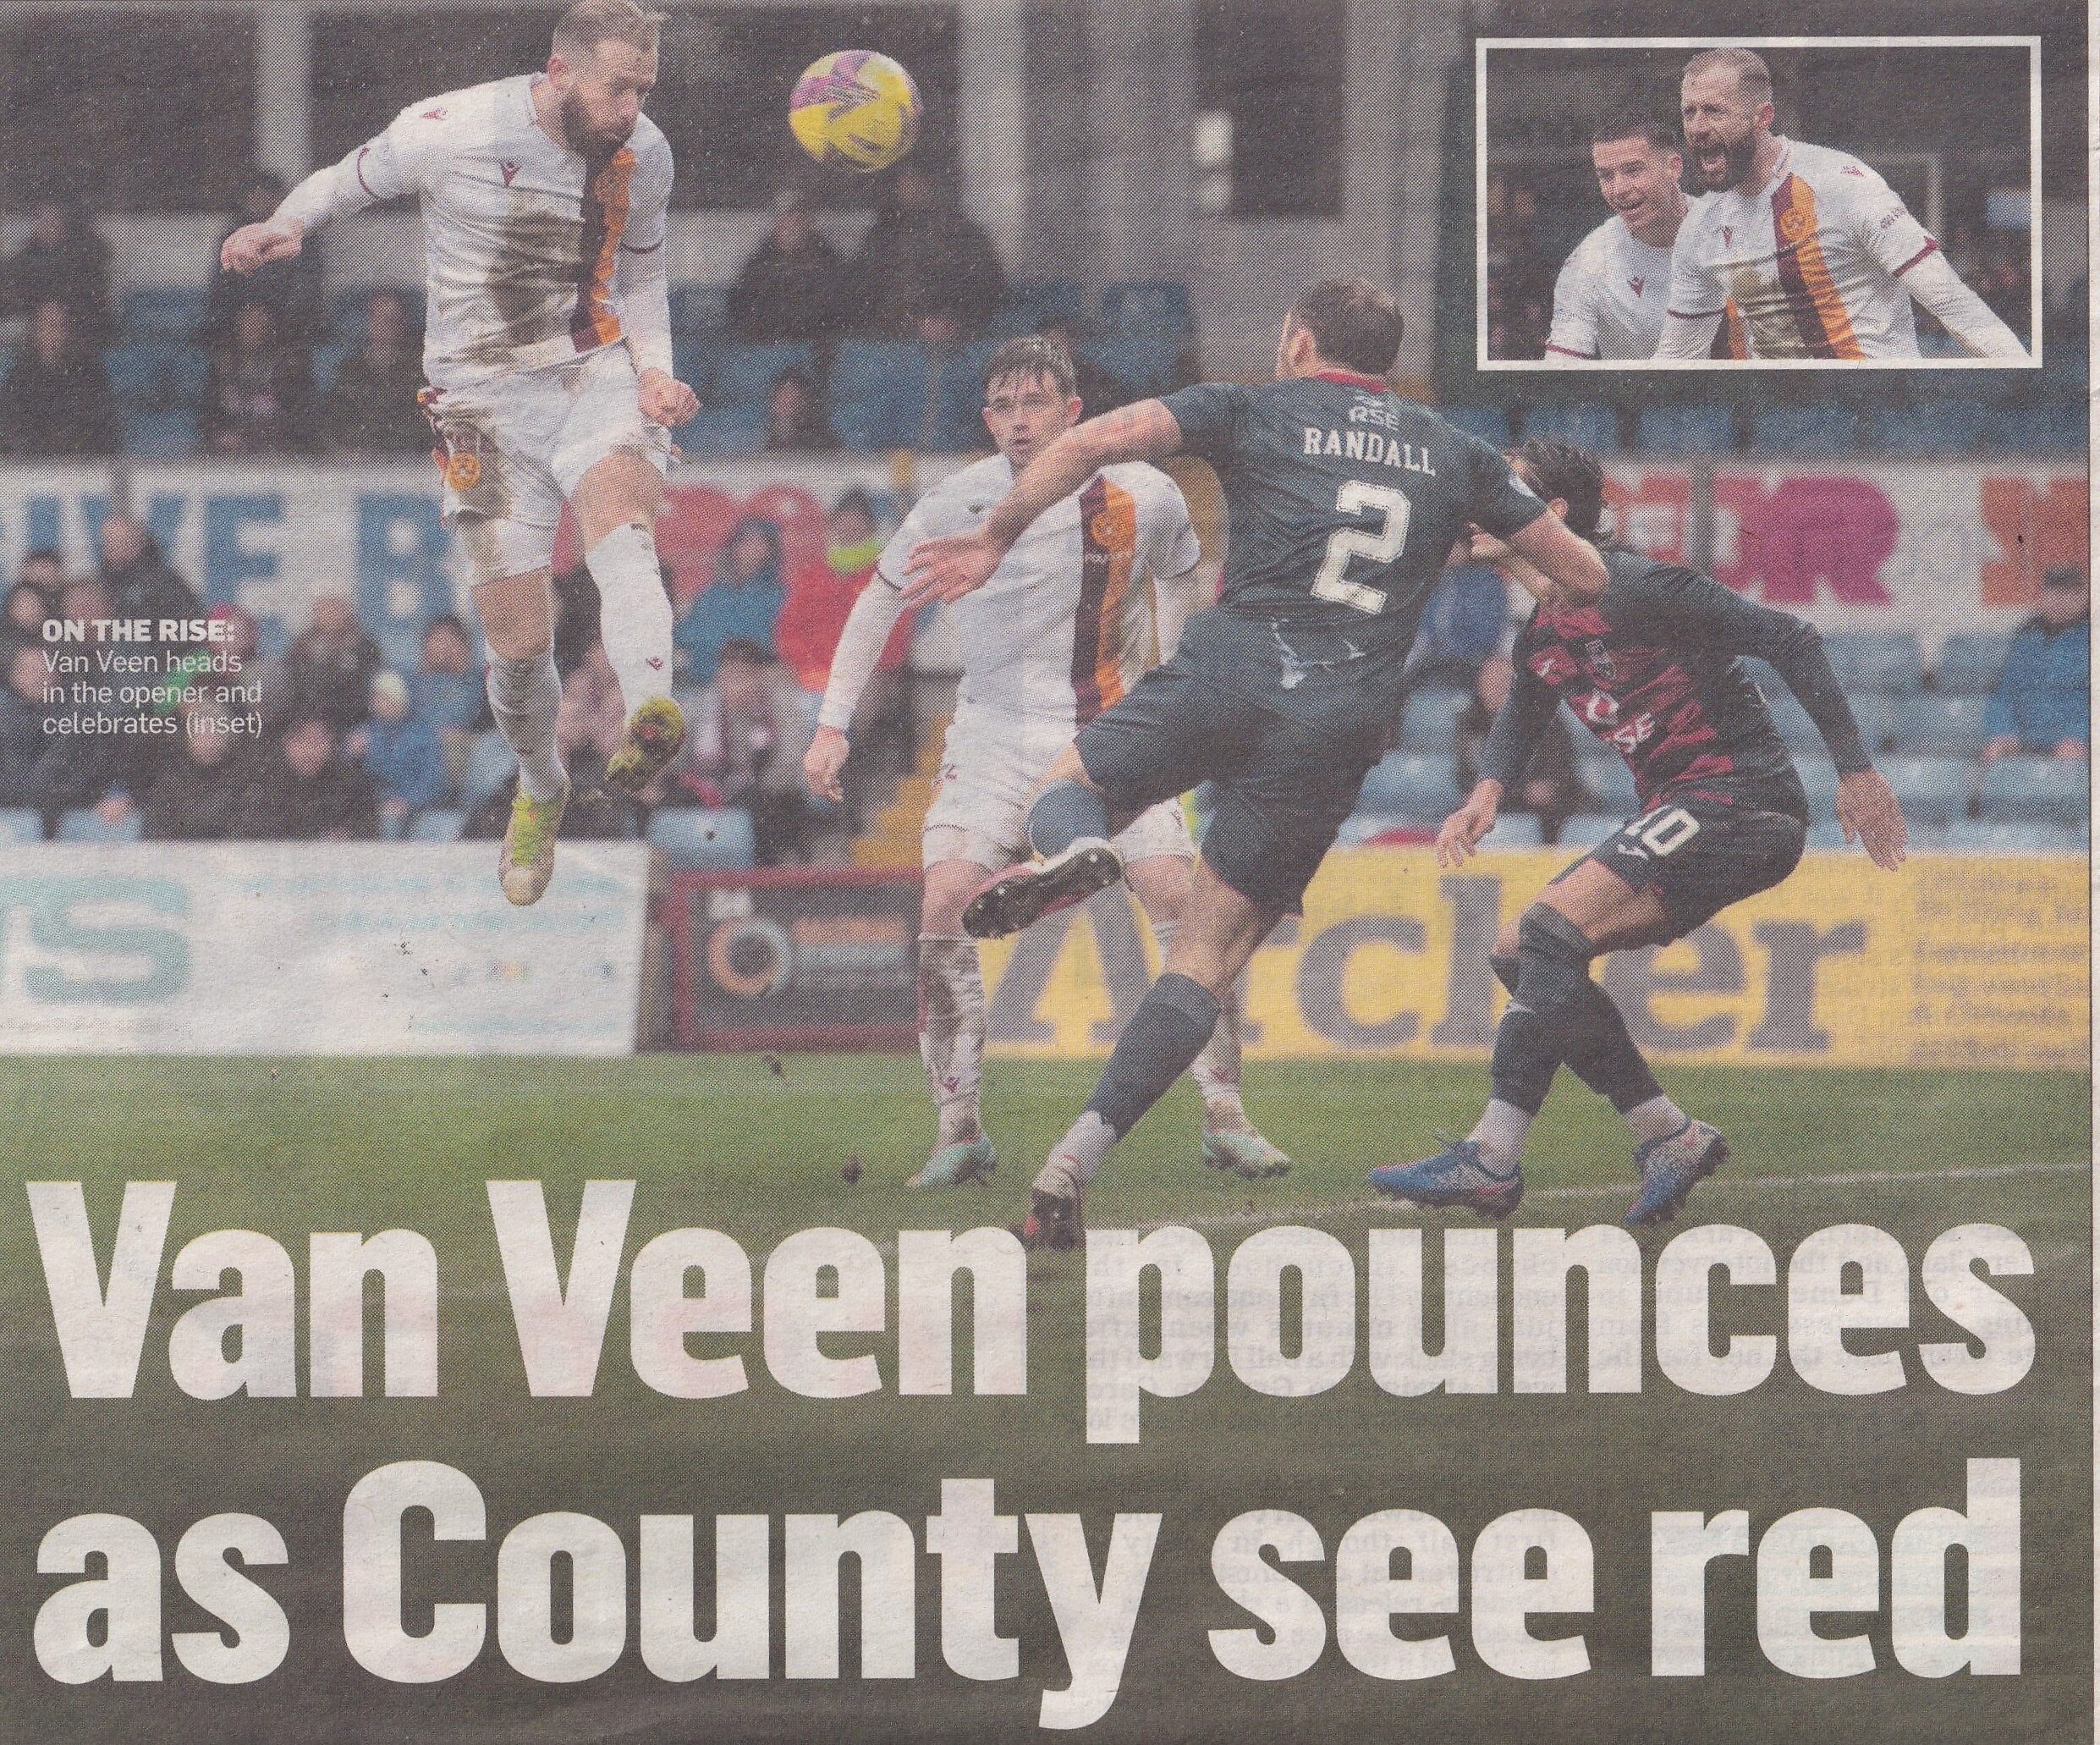 Ross County versus Motherwell Newspaper Match Report Snippet